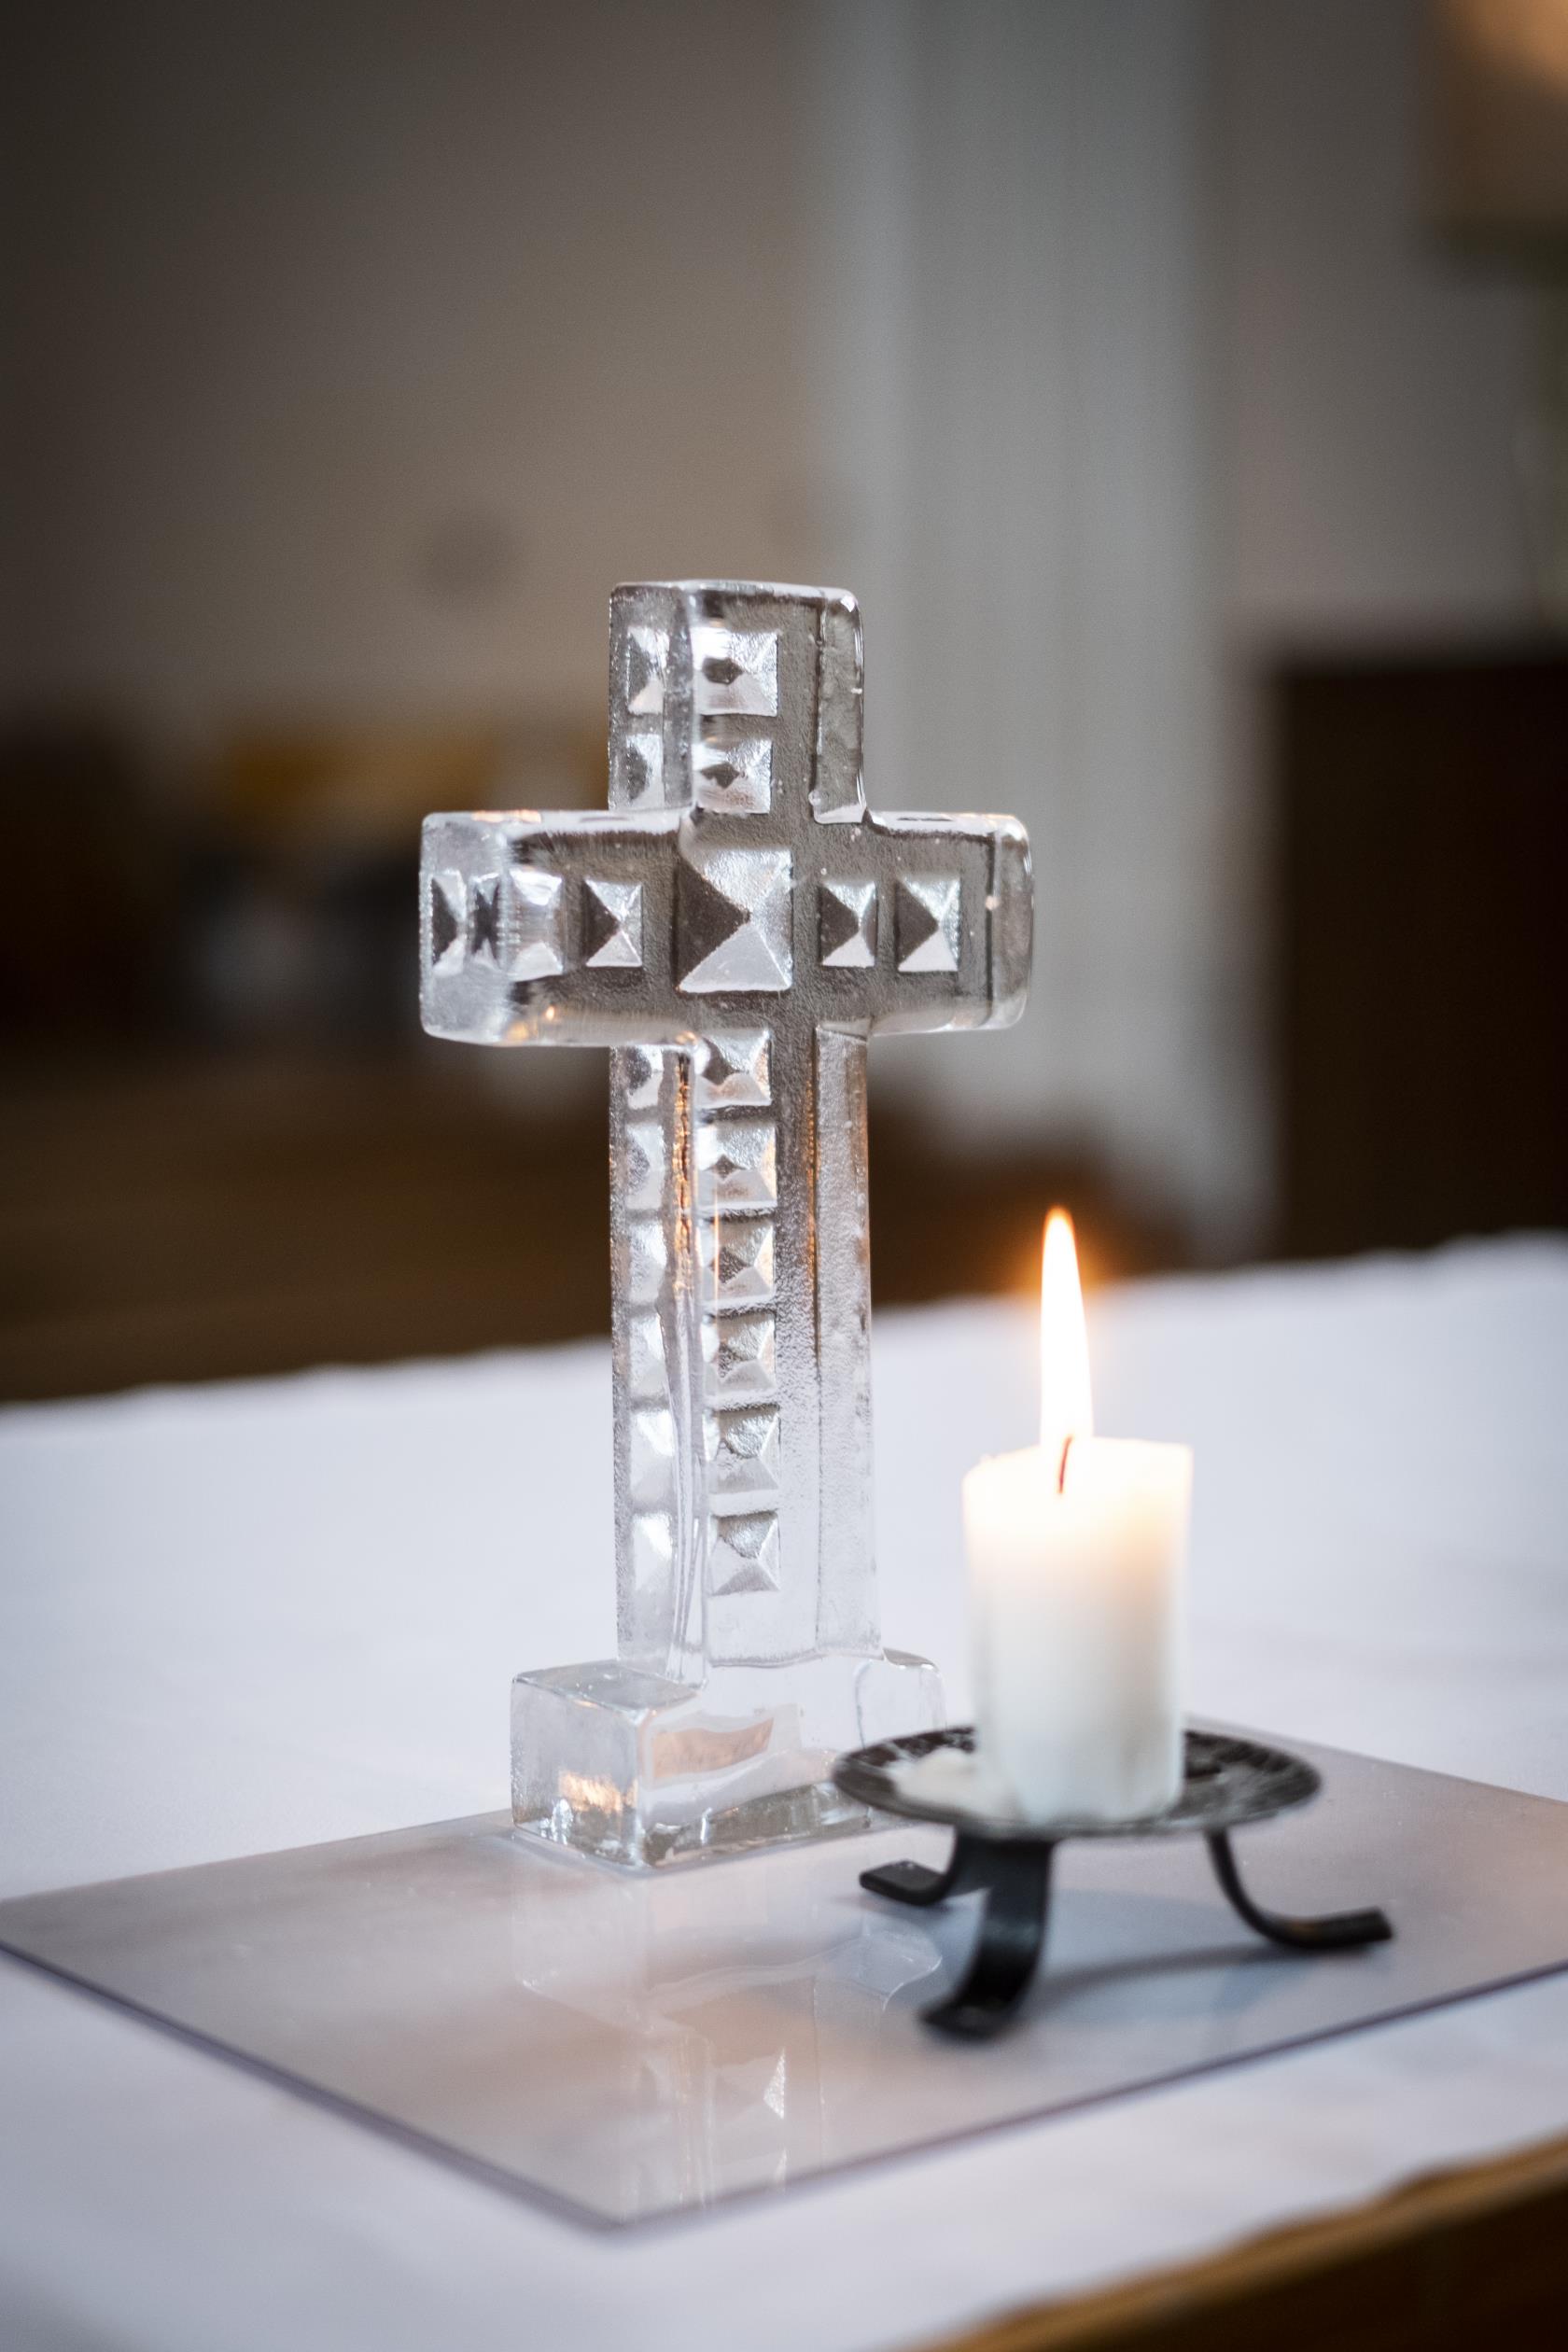 Ett kors av handgjort glas står på ett altare. Framför korset brinner ett ljus på en trefotad ljusstake.